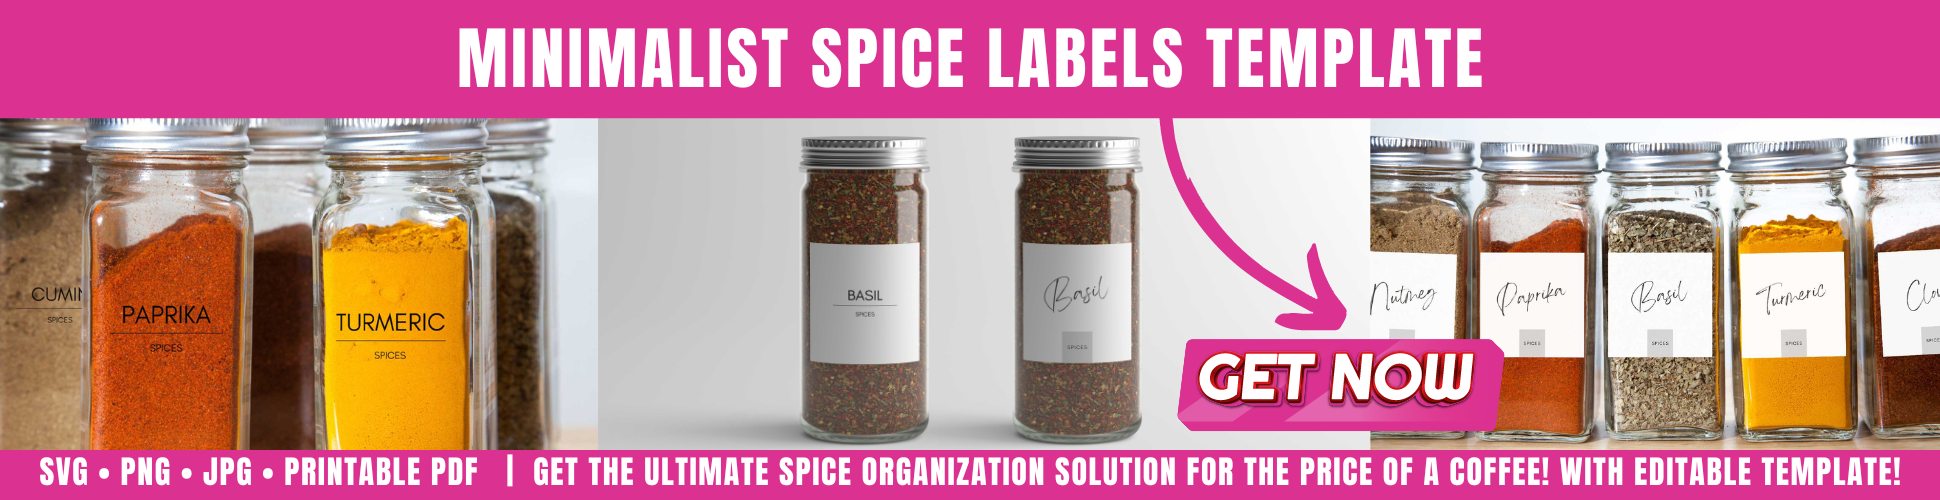 minimalist spice labels